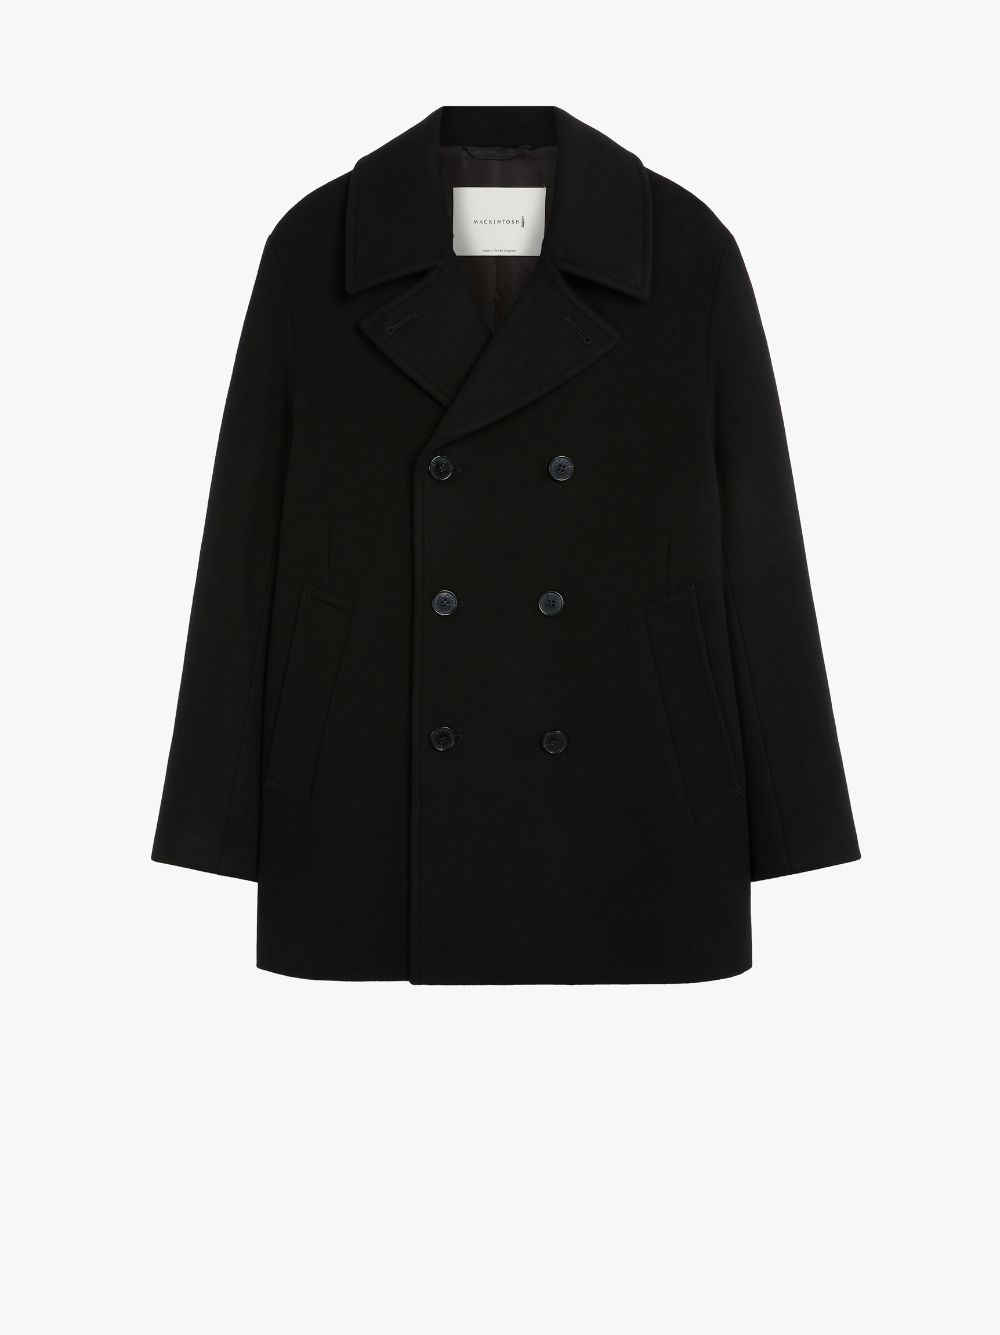 DALTON Black Wool & Cashmere Pea Coat | GM-1075F | Mackintosh